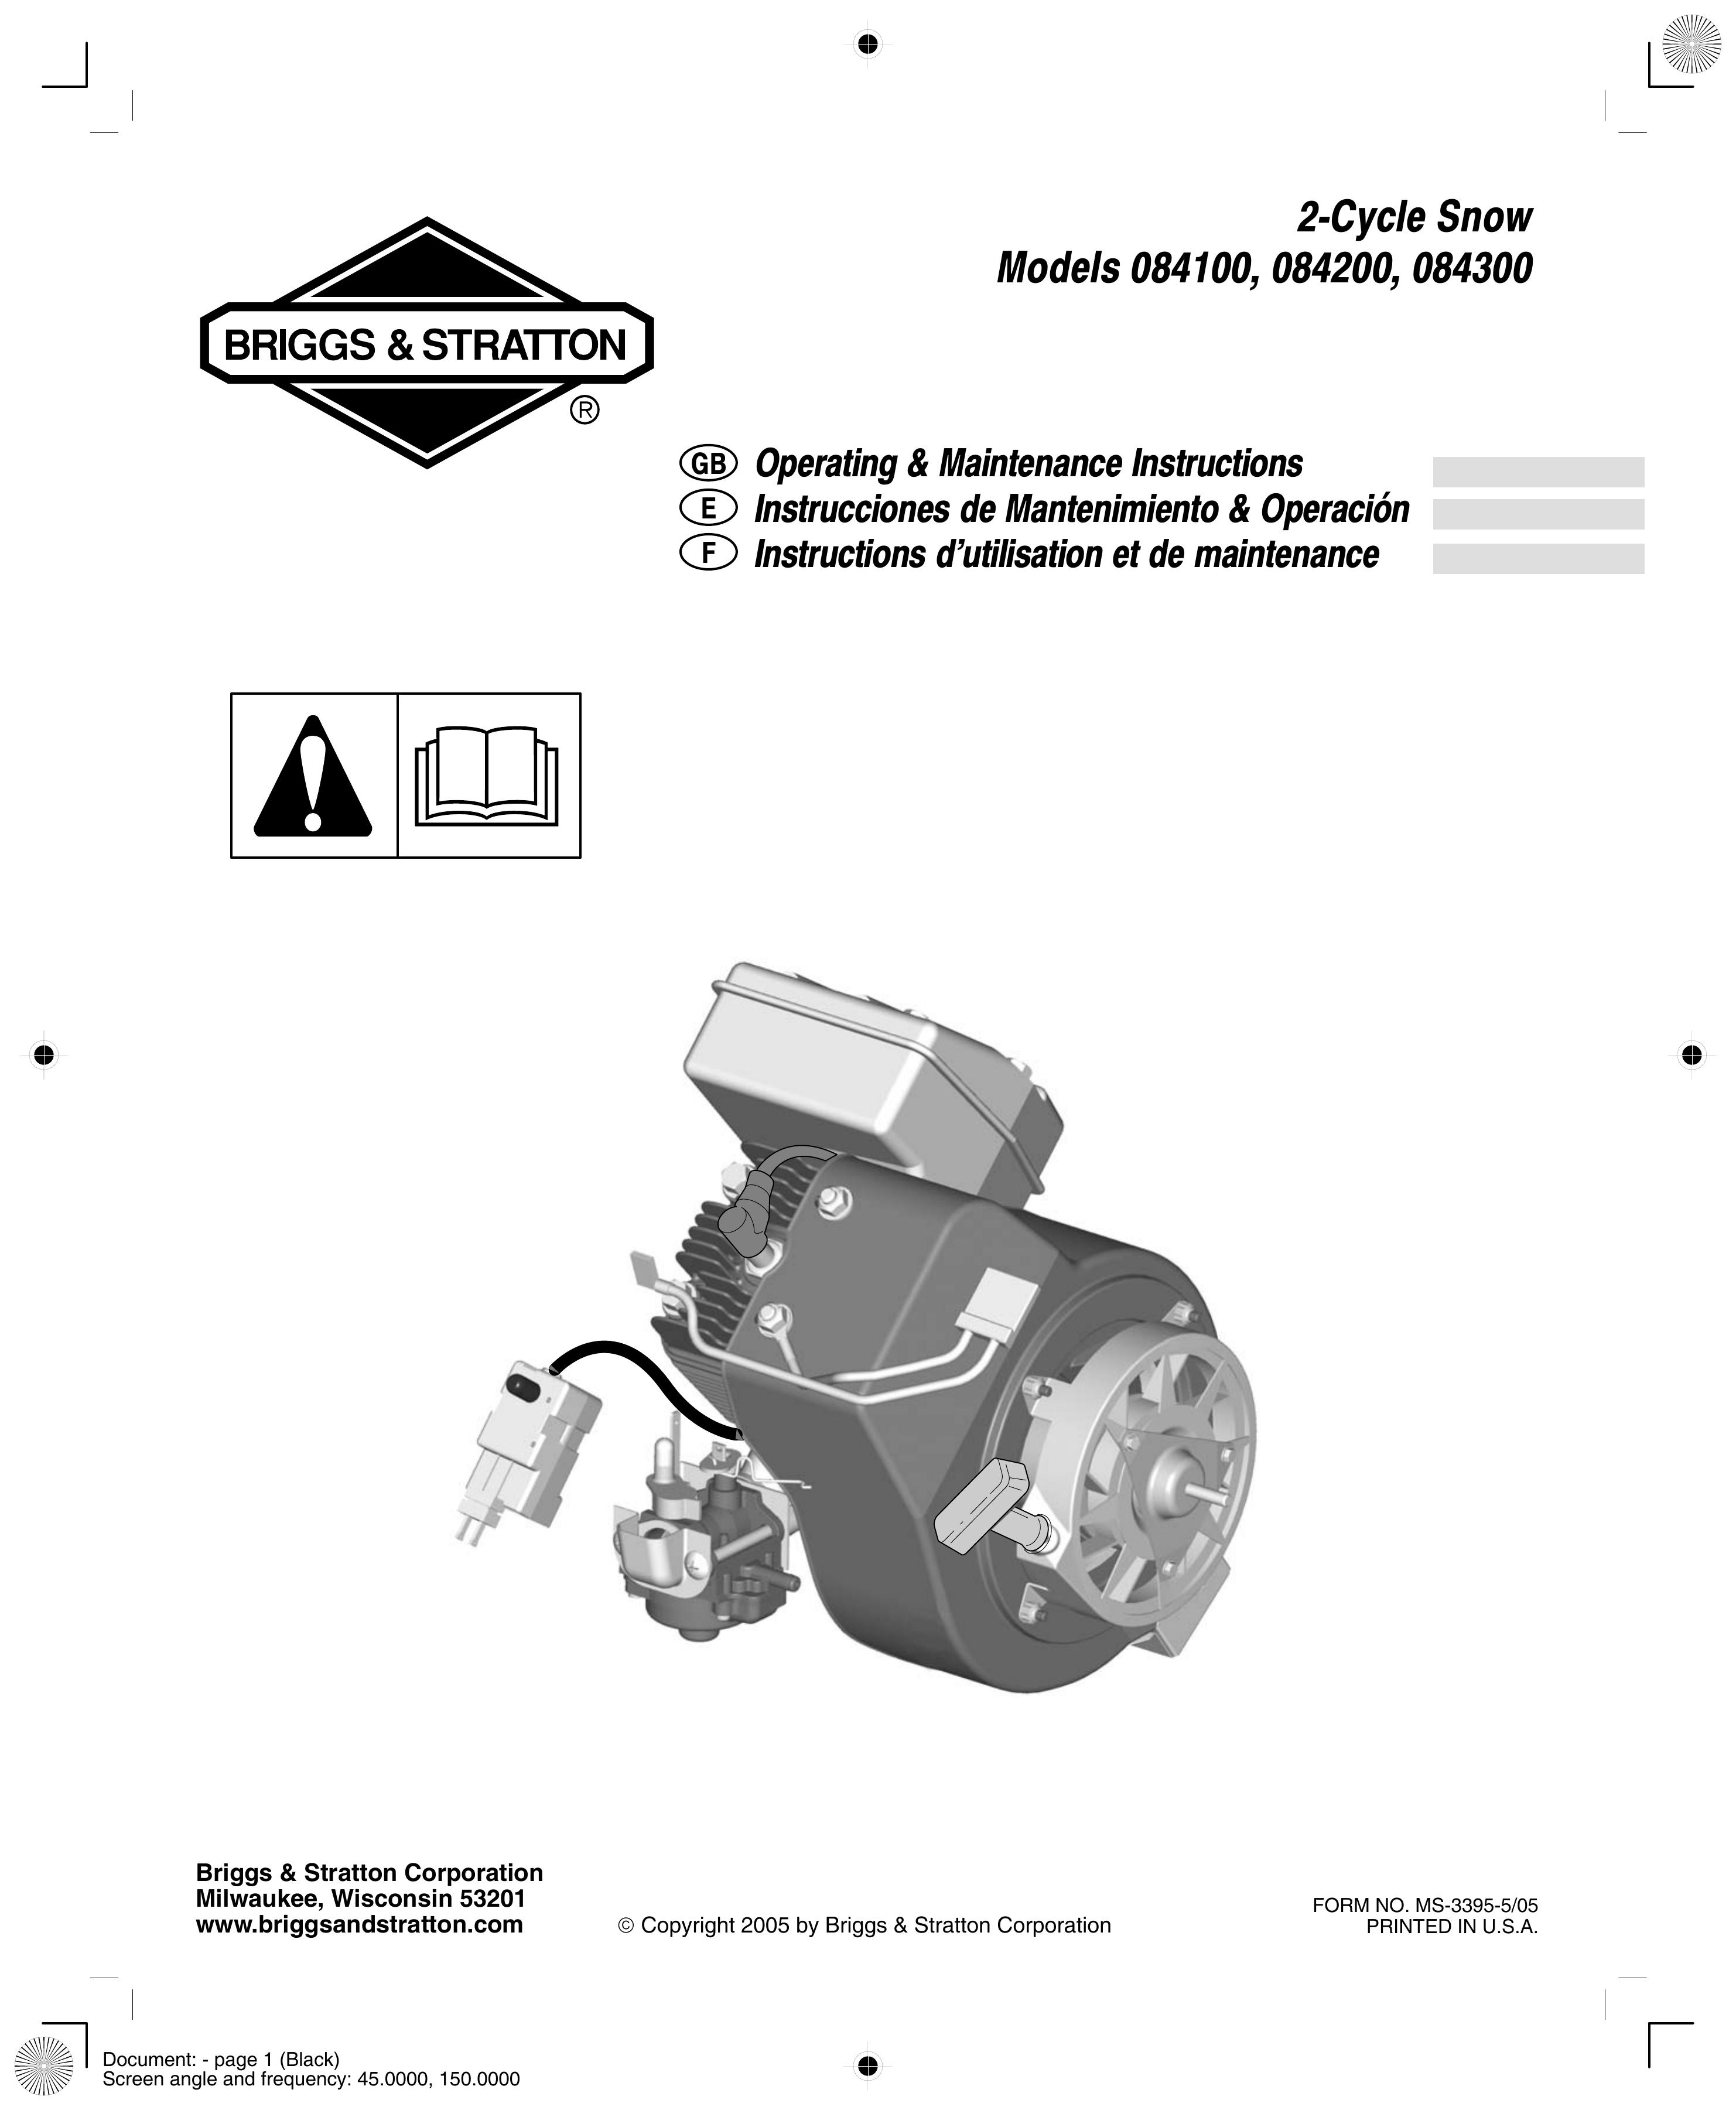 Briggs & Stratton 84200 Snow Blower User Manual